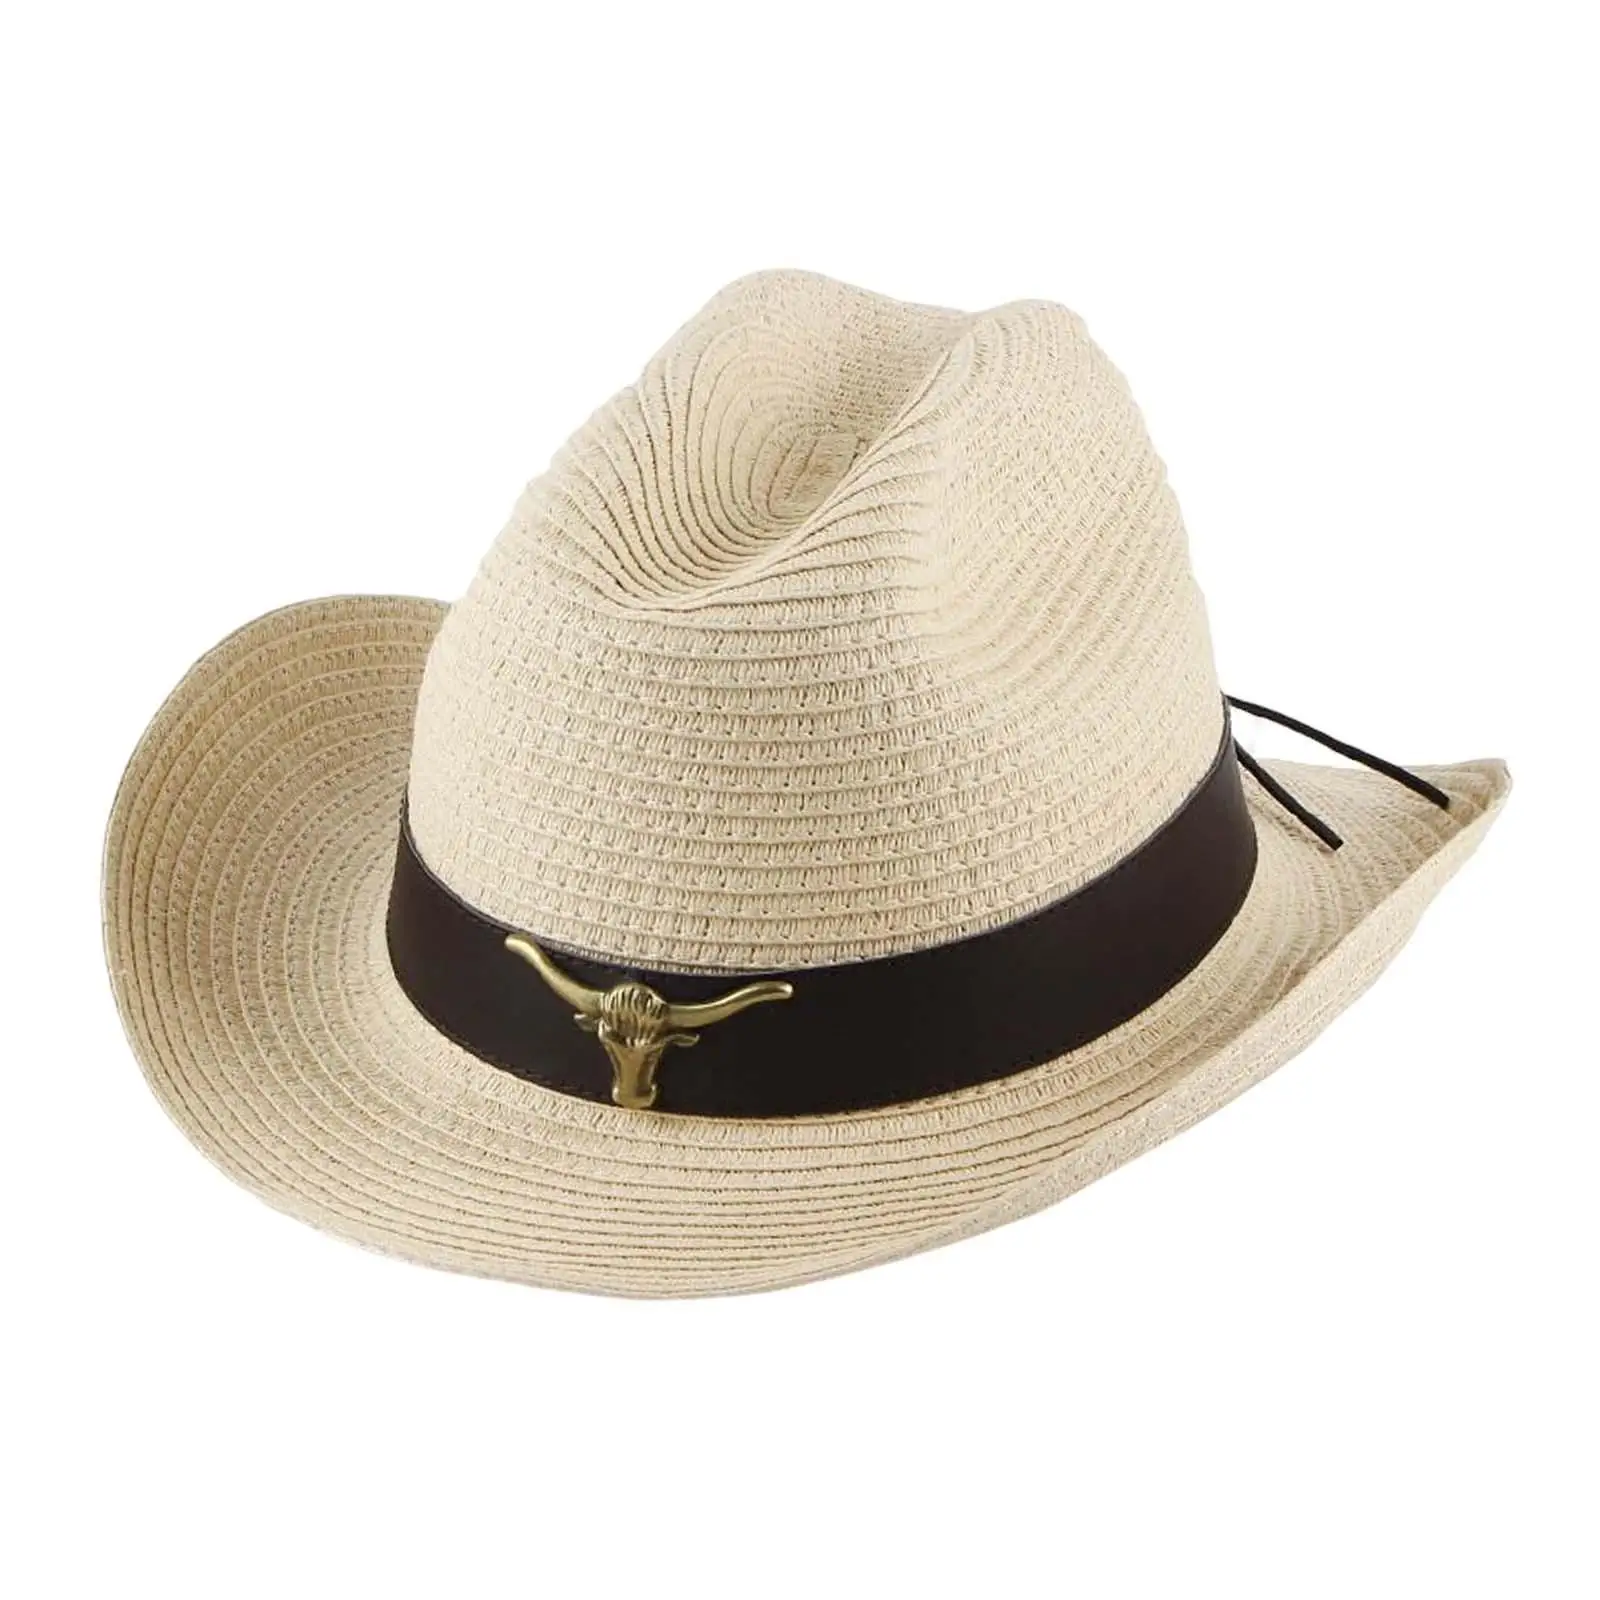 Western Cowboy Hat Unisex Wide Brim Sunshade Hat for Holiday Summer Beach Adults